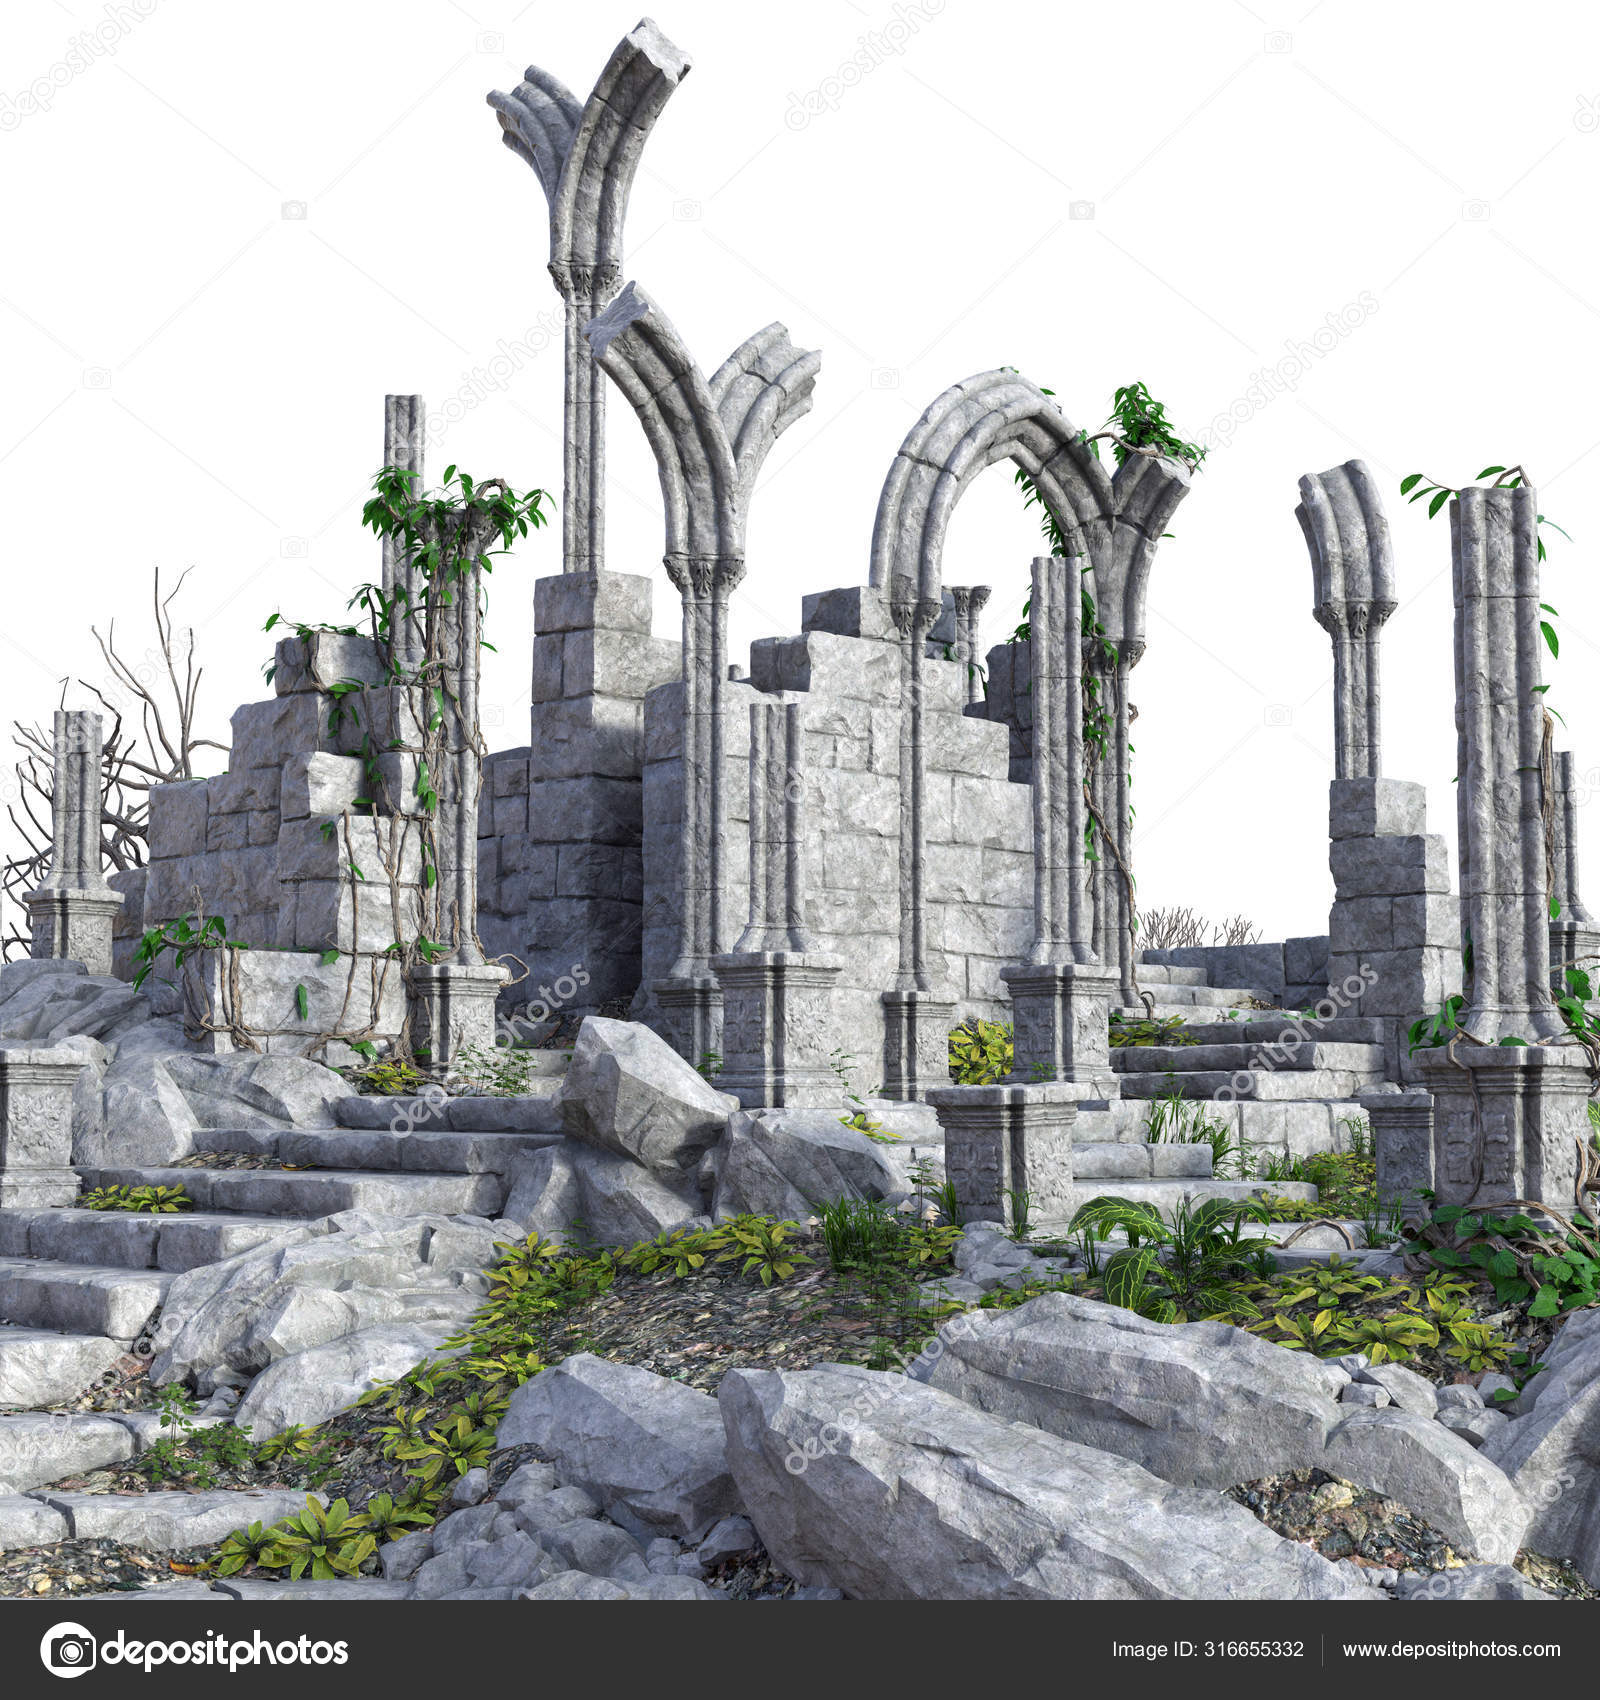 Temple Castle Run 3D 1.6 Free Download